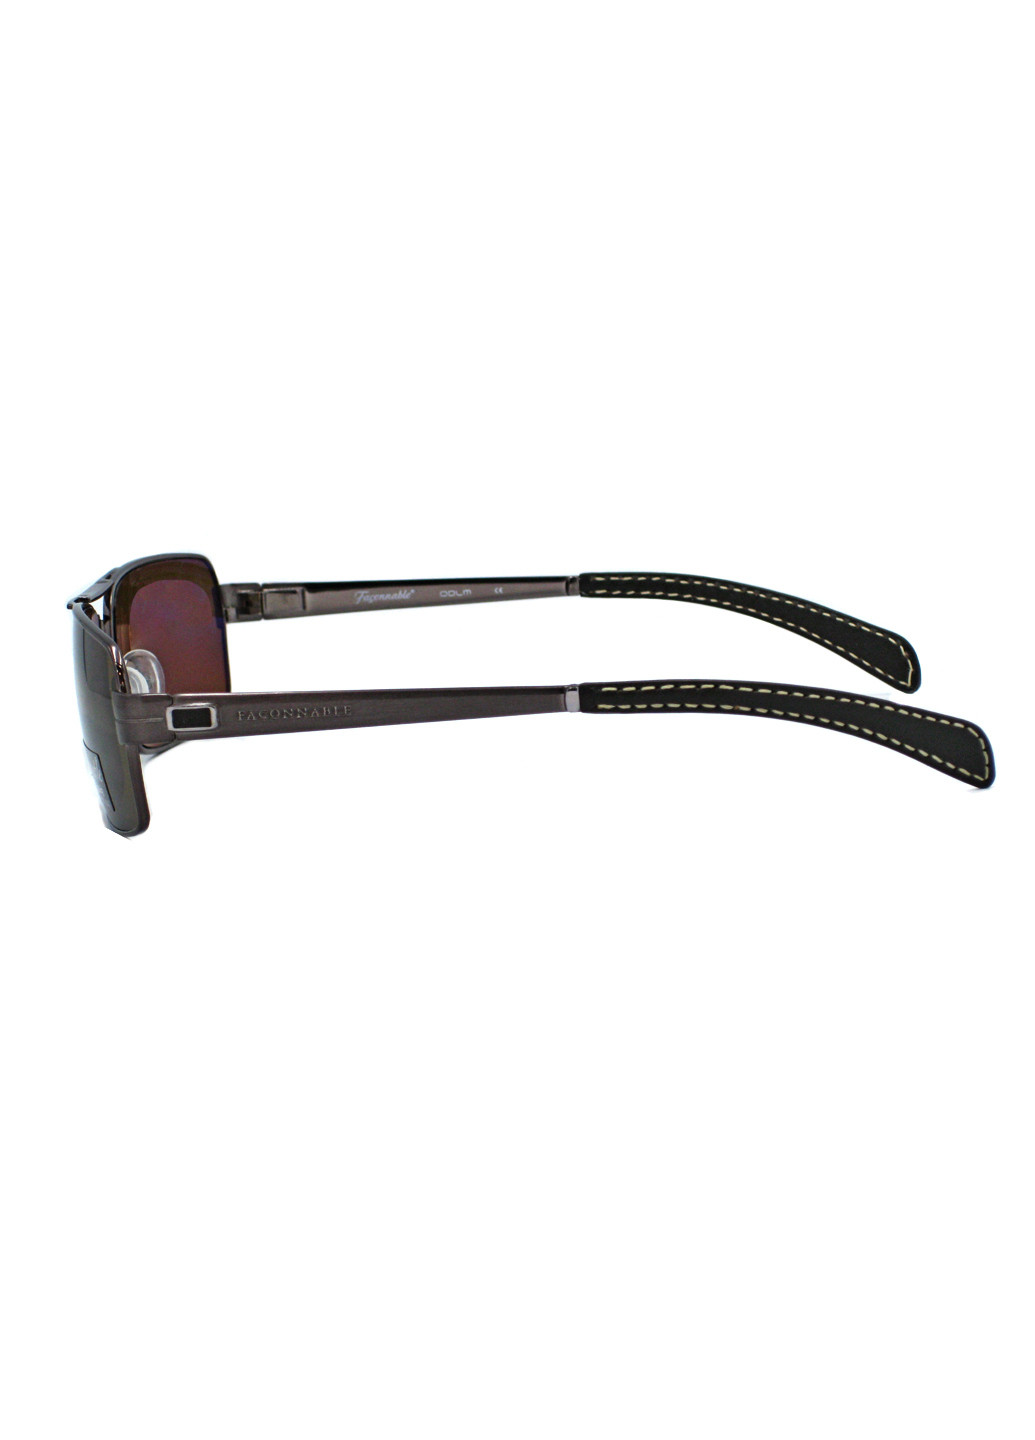 Солнцезащитные очки Faconnable vs2820 871 (260634274)